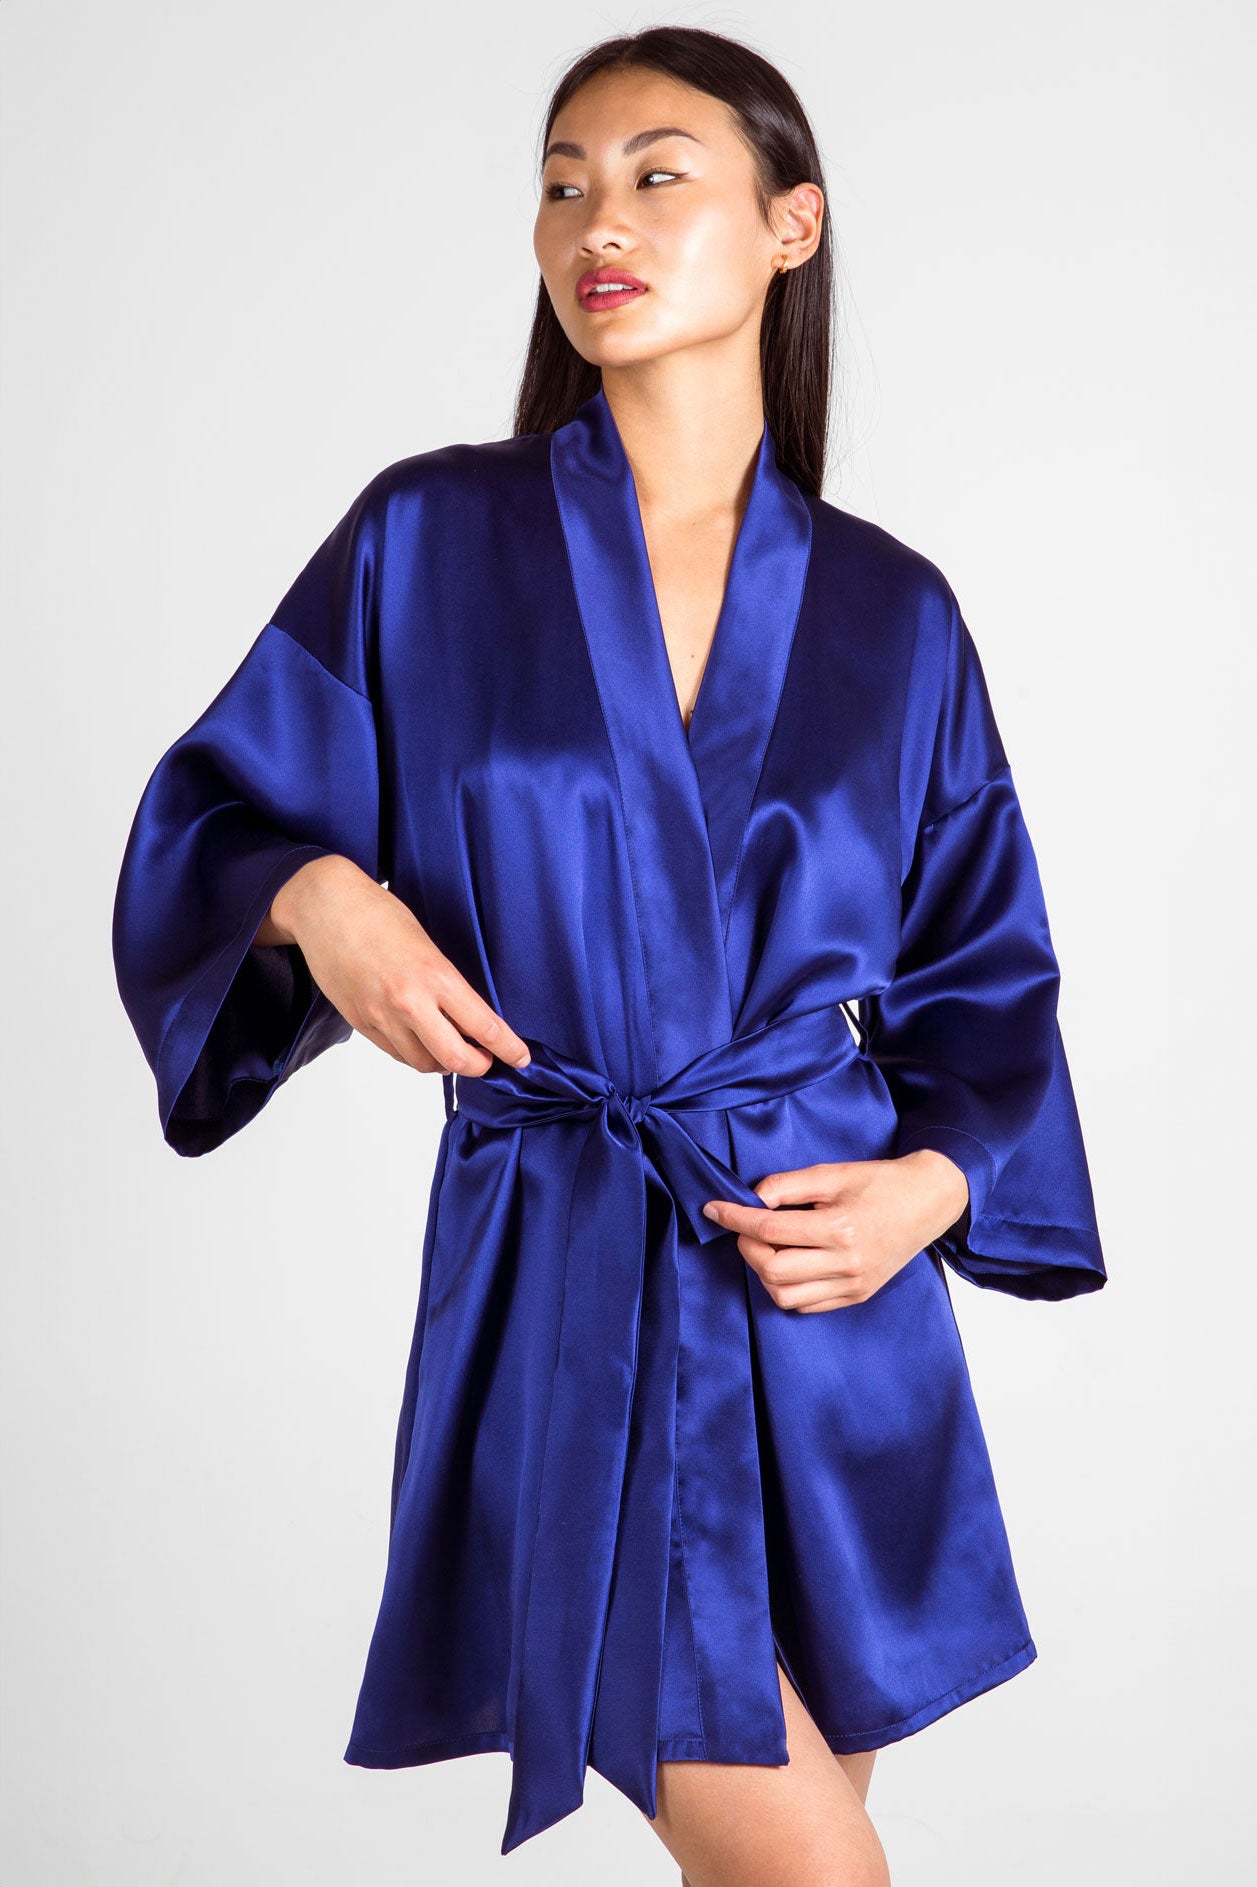 Video of the Julianna silk robe in indigo blue silk satin